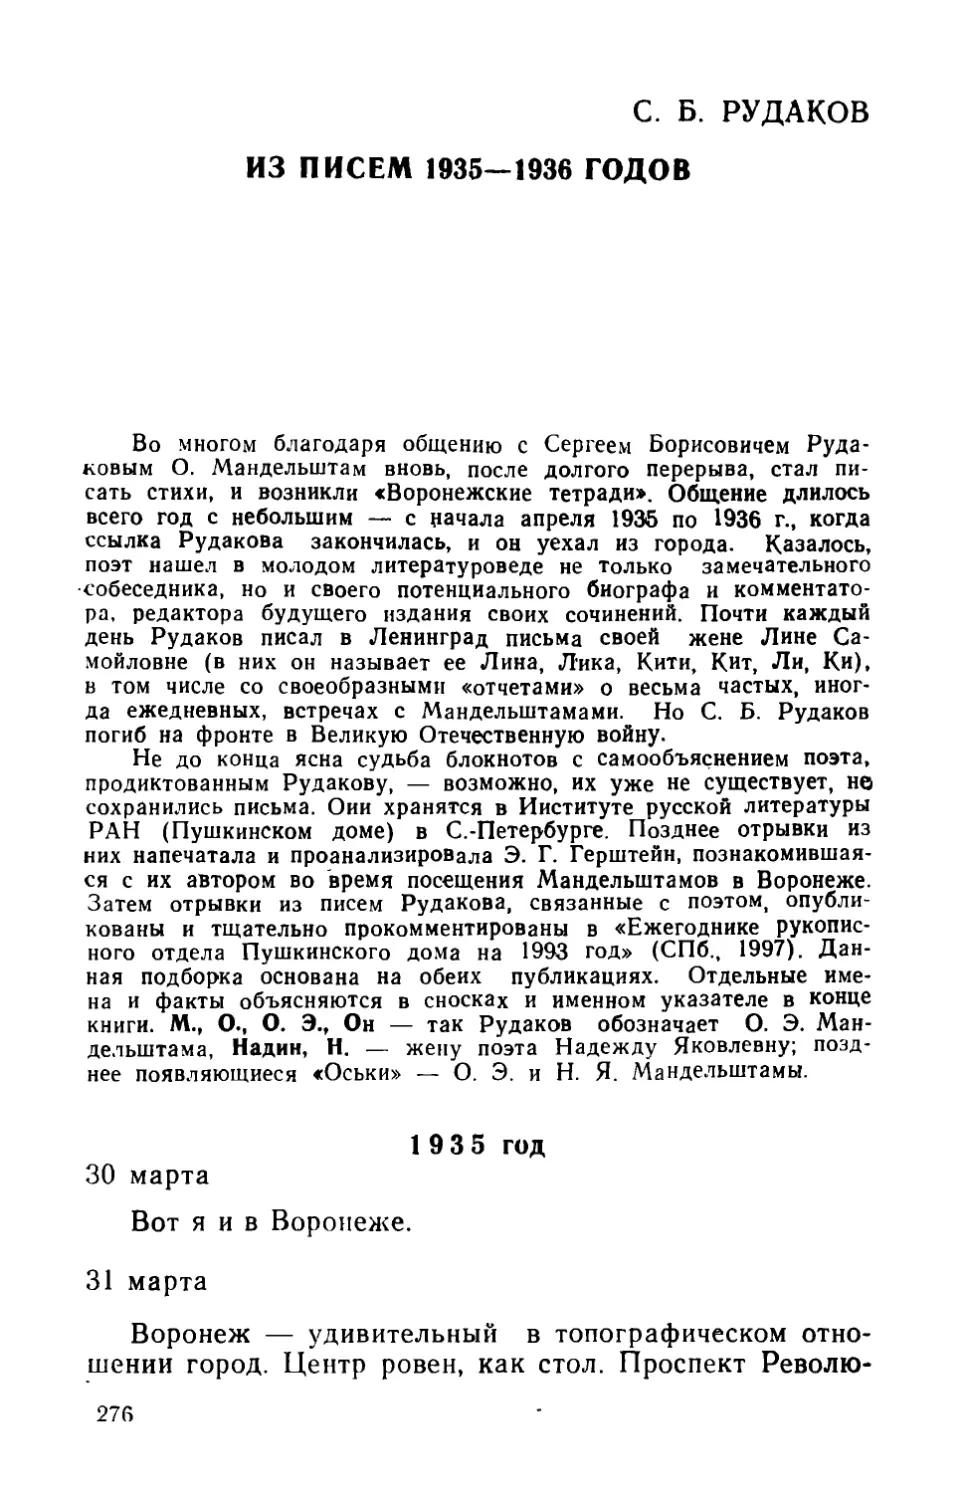 C. Рудаков. Из писем 1935—1936 годов